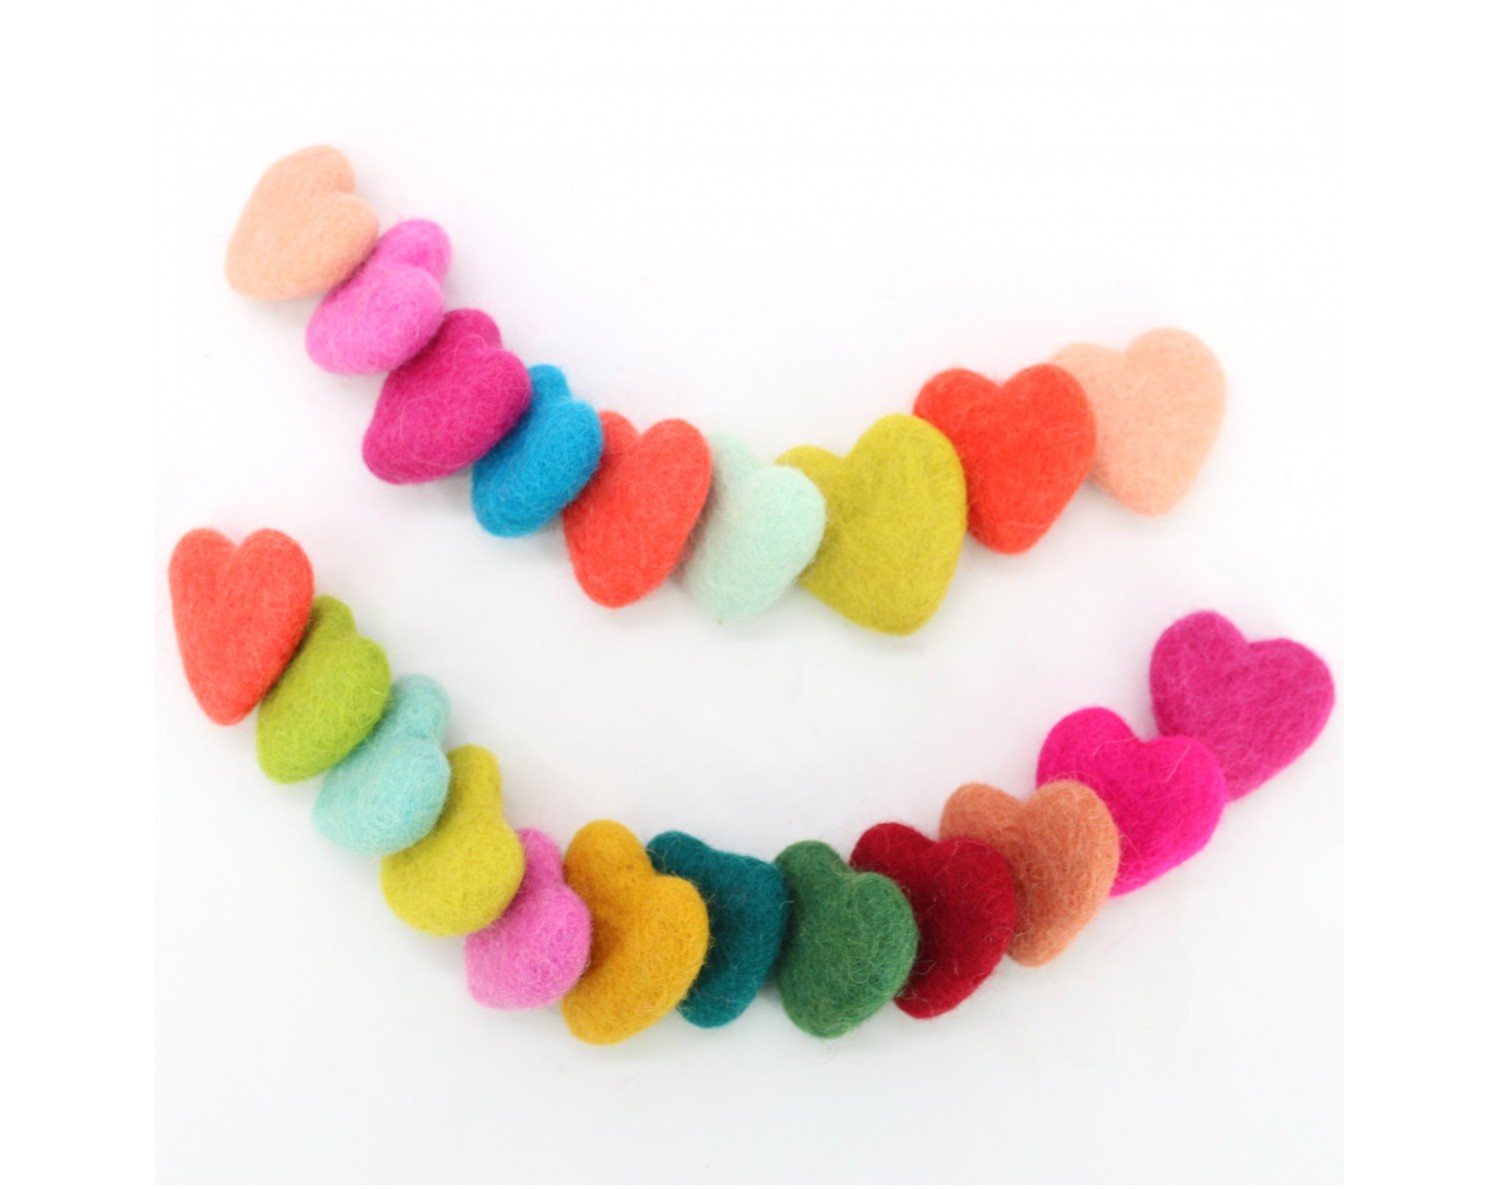 4-5cm Multicolor Felt Heart